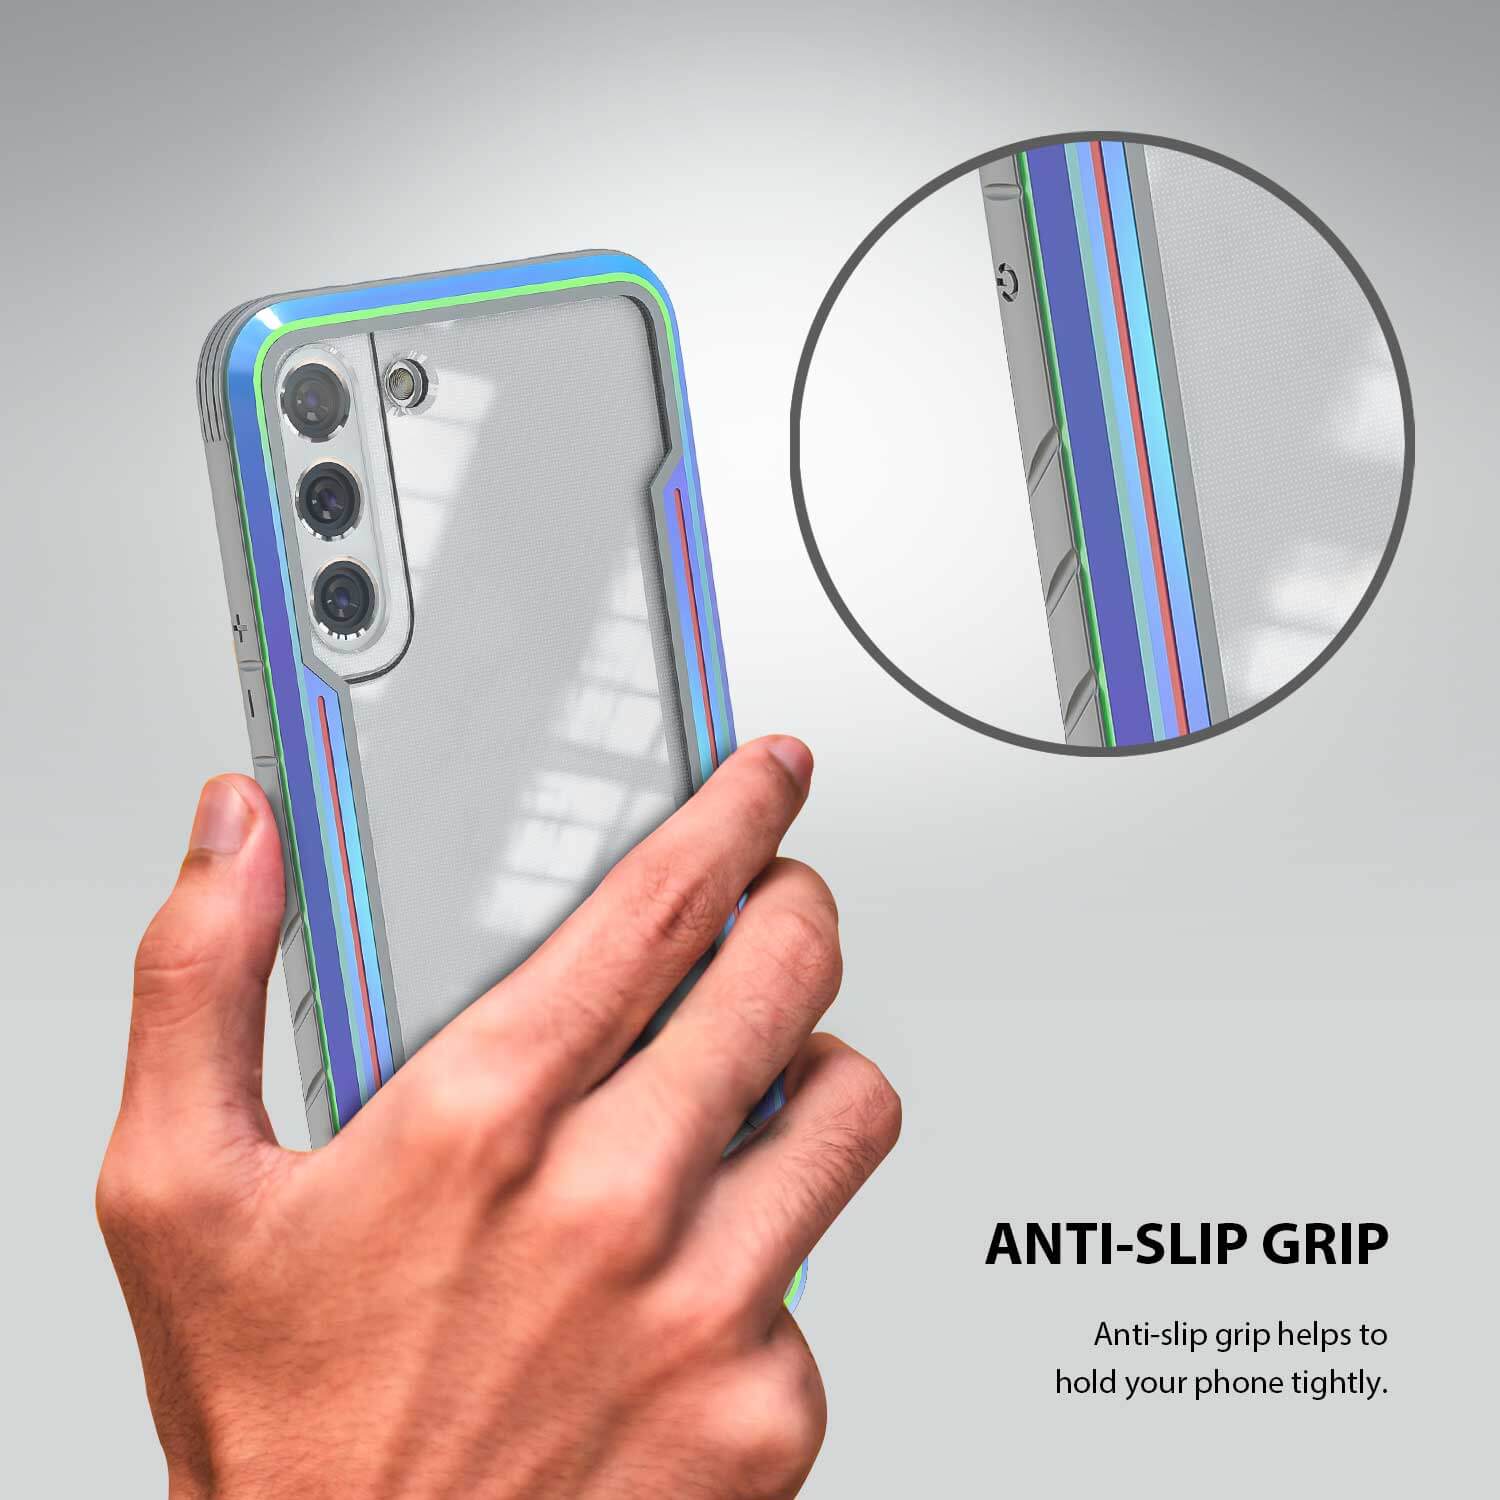 Tough On Samsung Galaxy S22 Plus 5G Case Iron Shield Iridescent